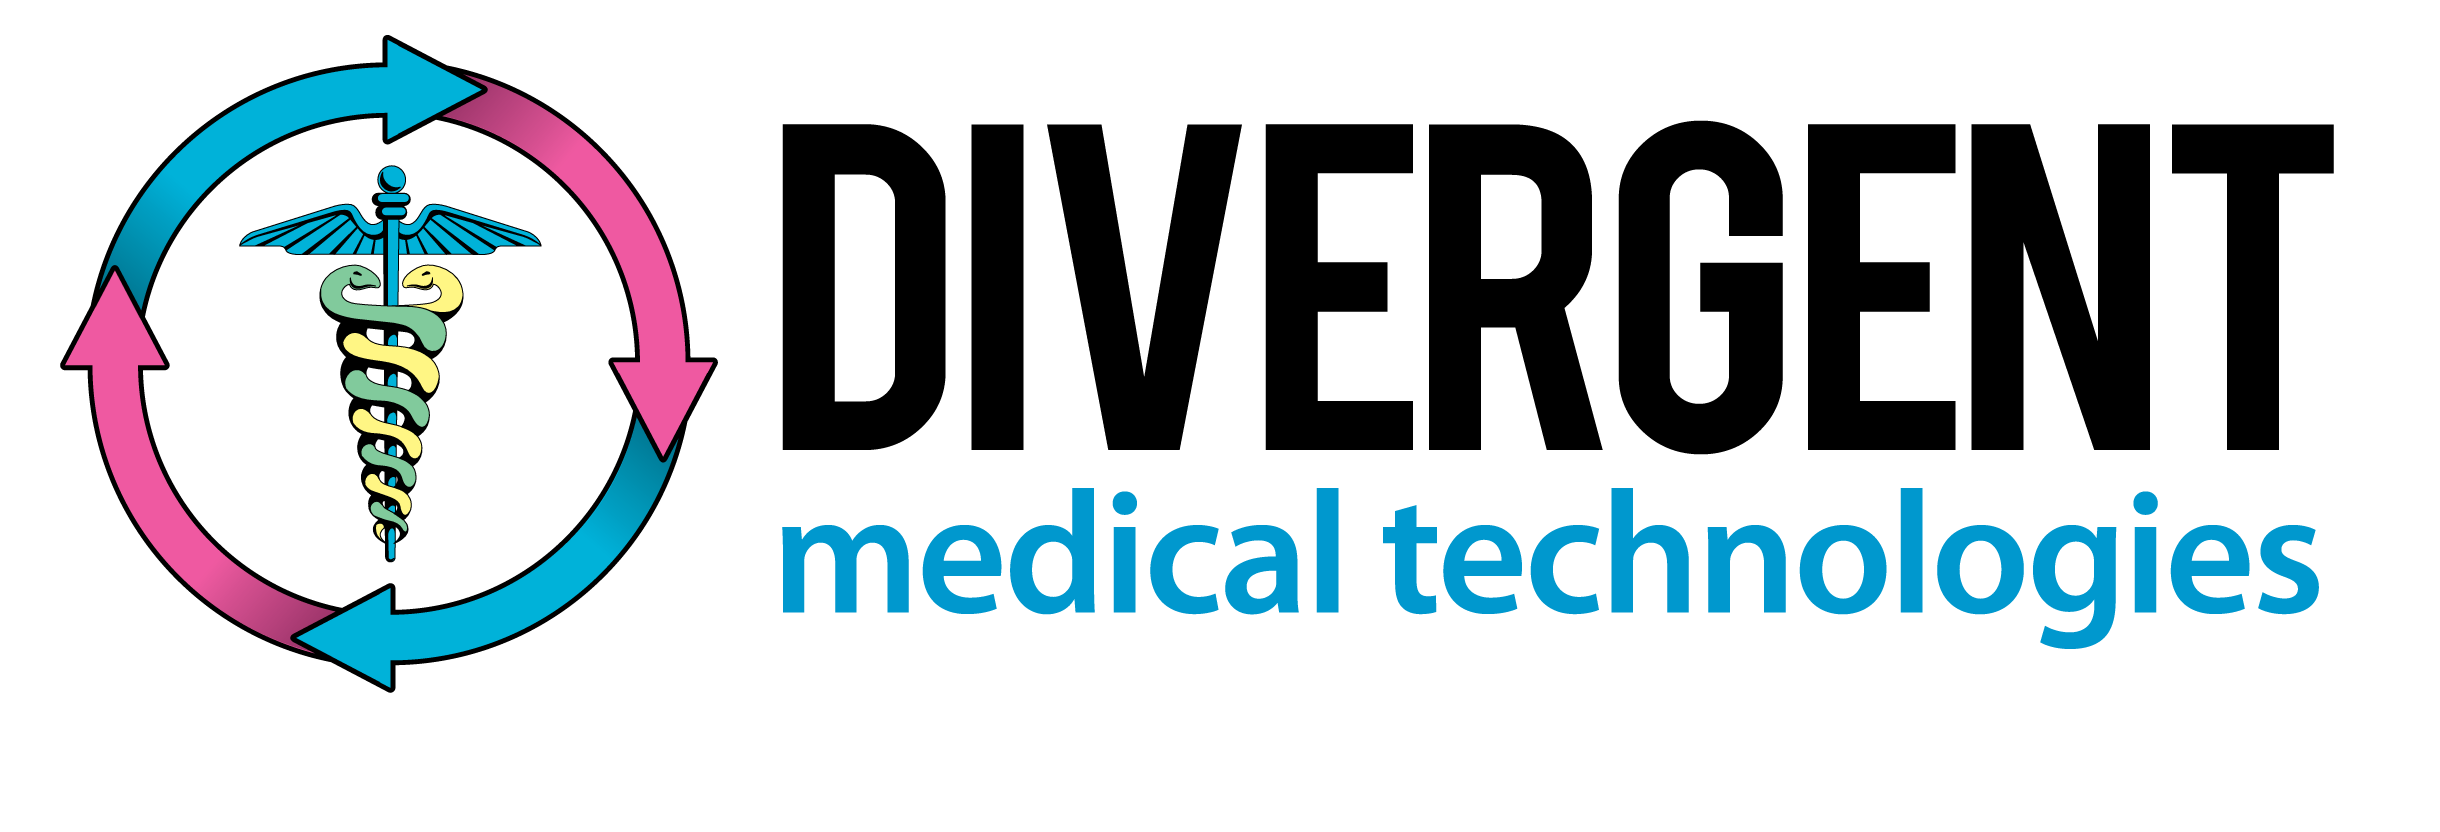 Divergent Medical Technologies